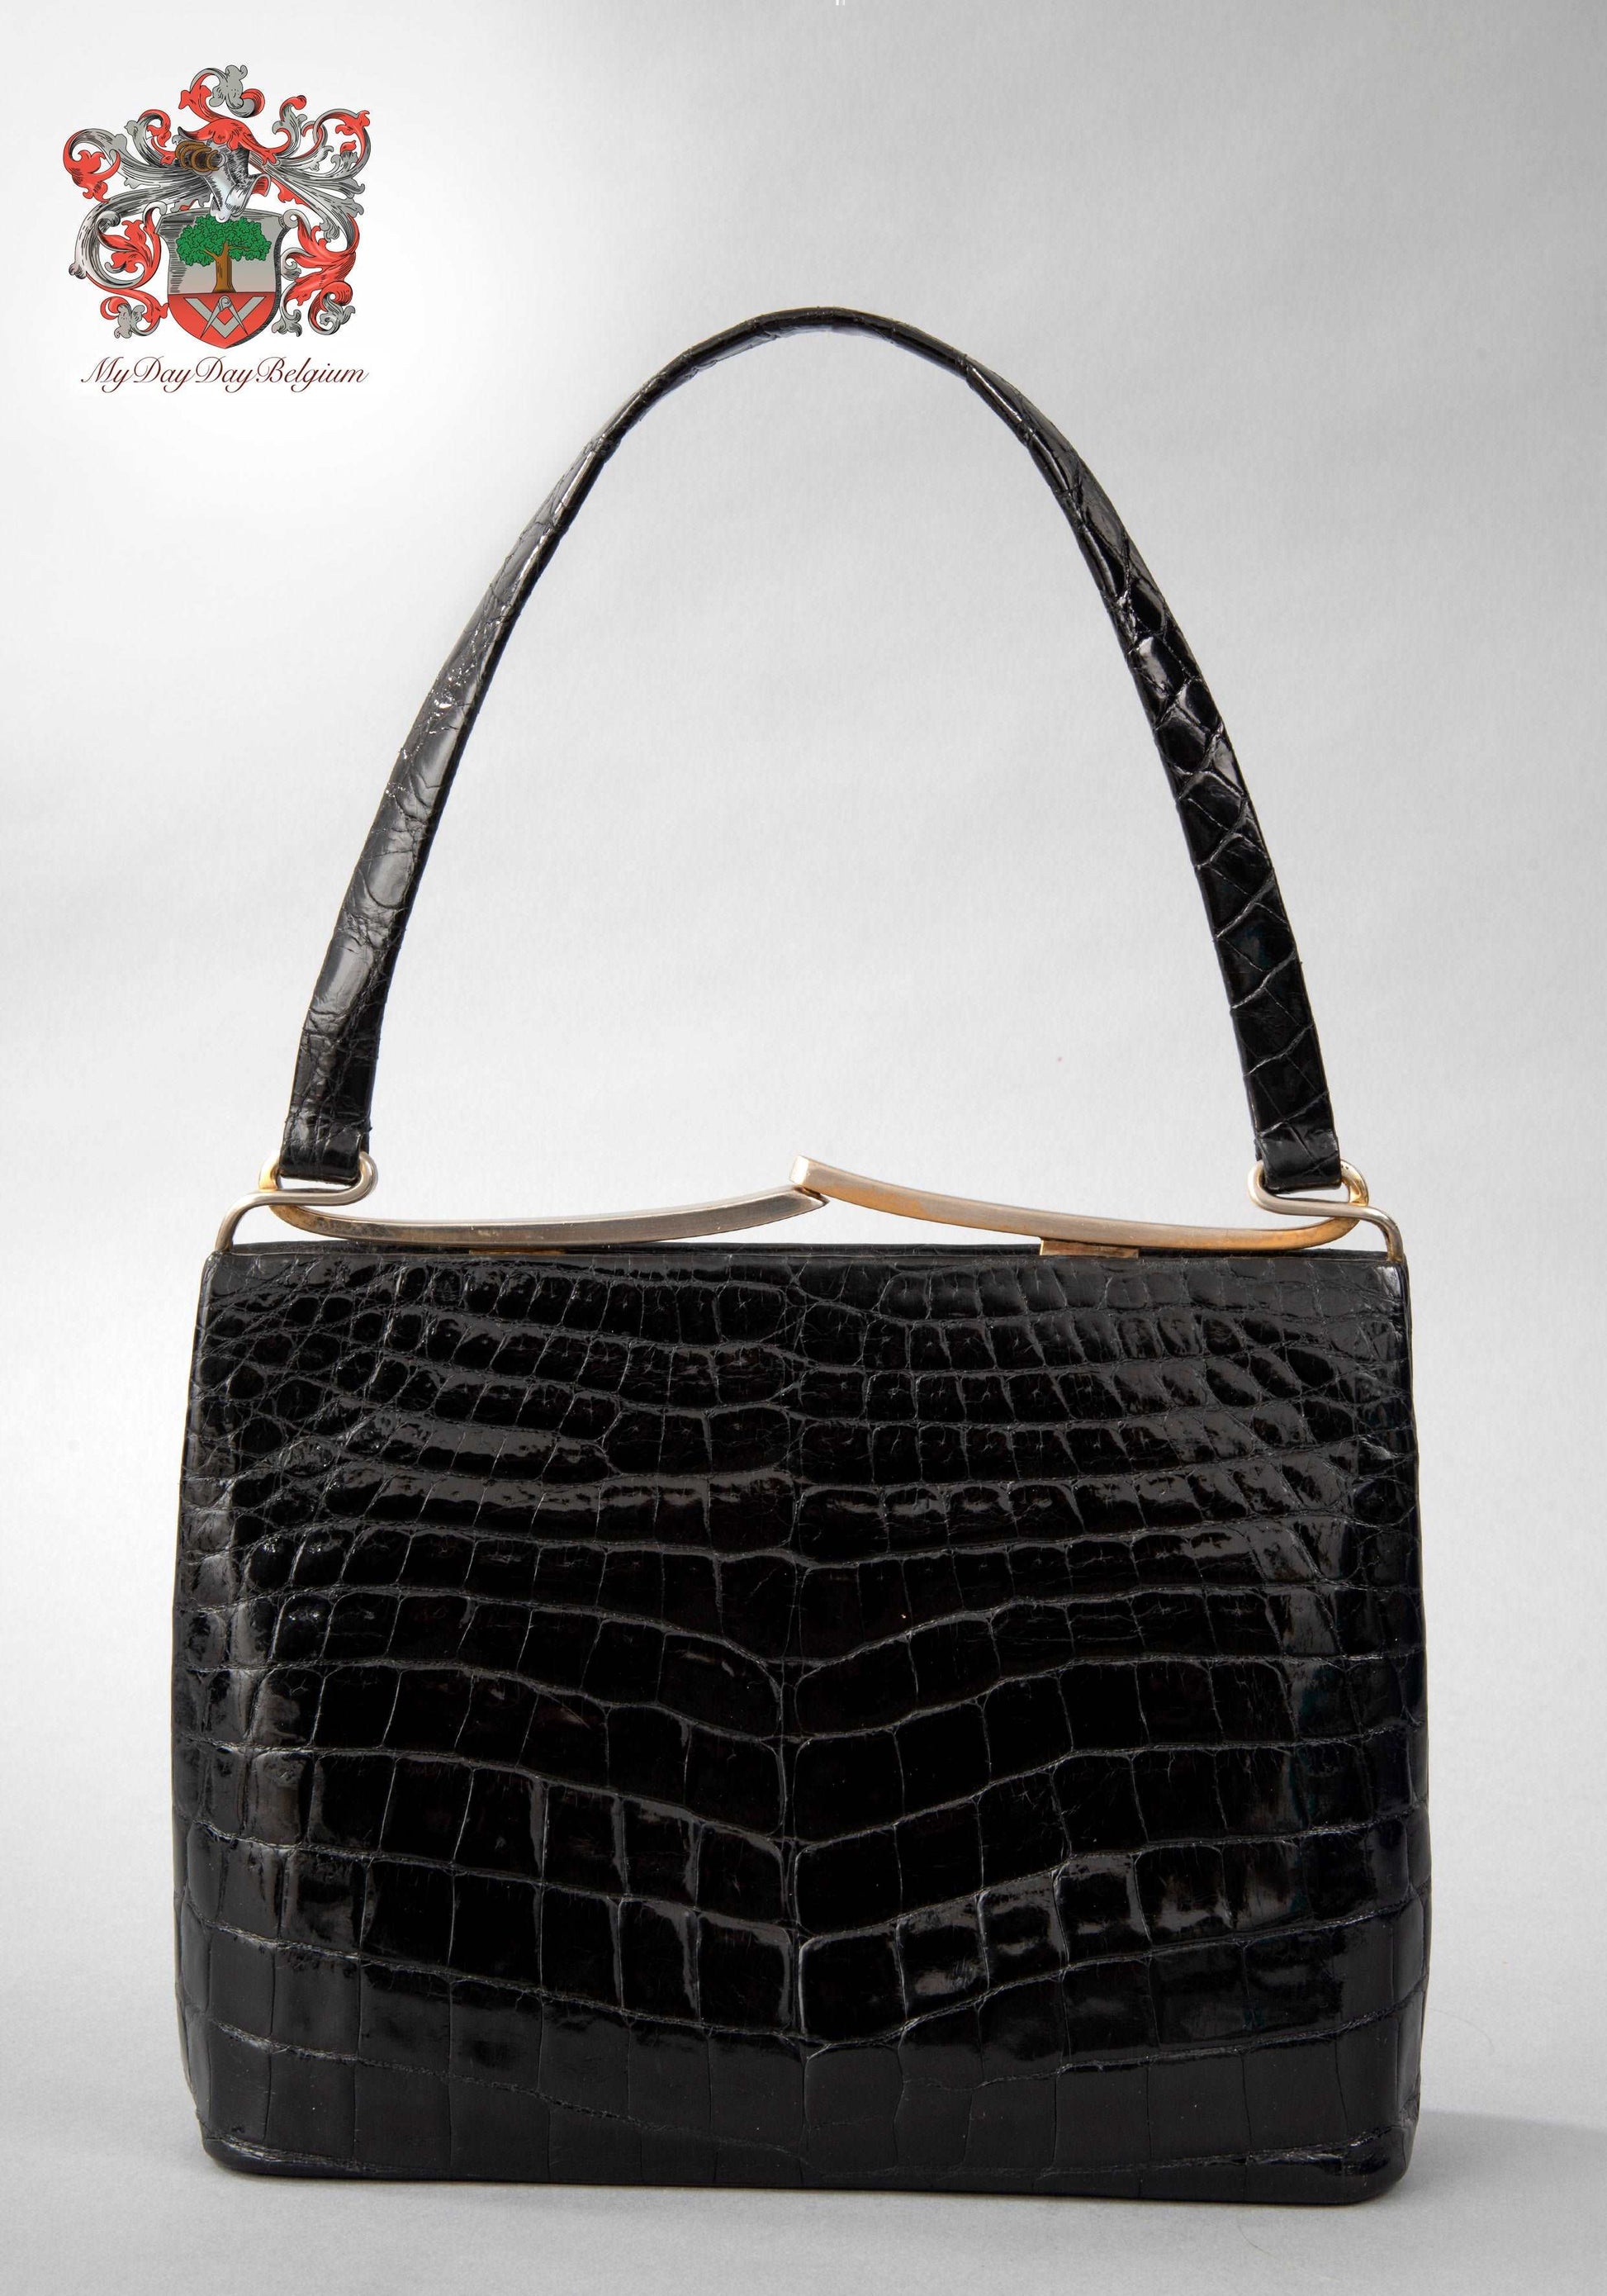 Delvaux Women's Leather Exterior Bags & Handbags